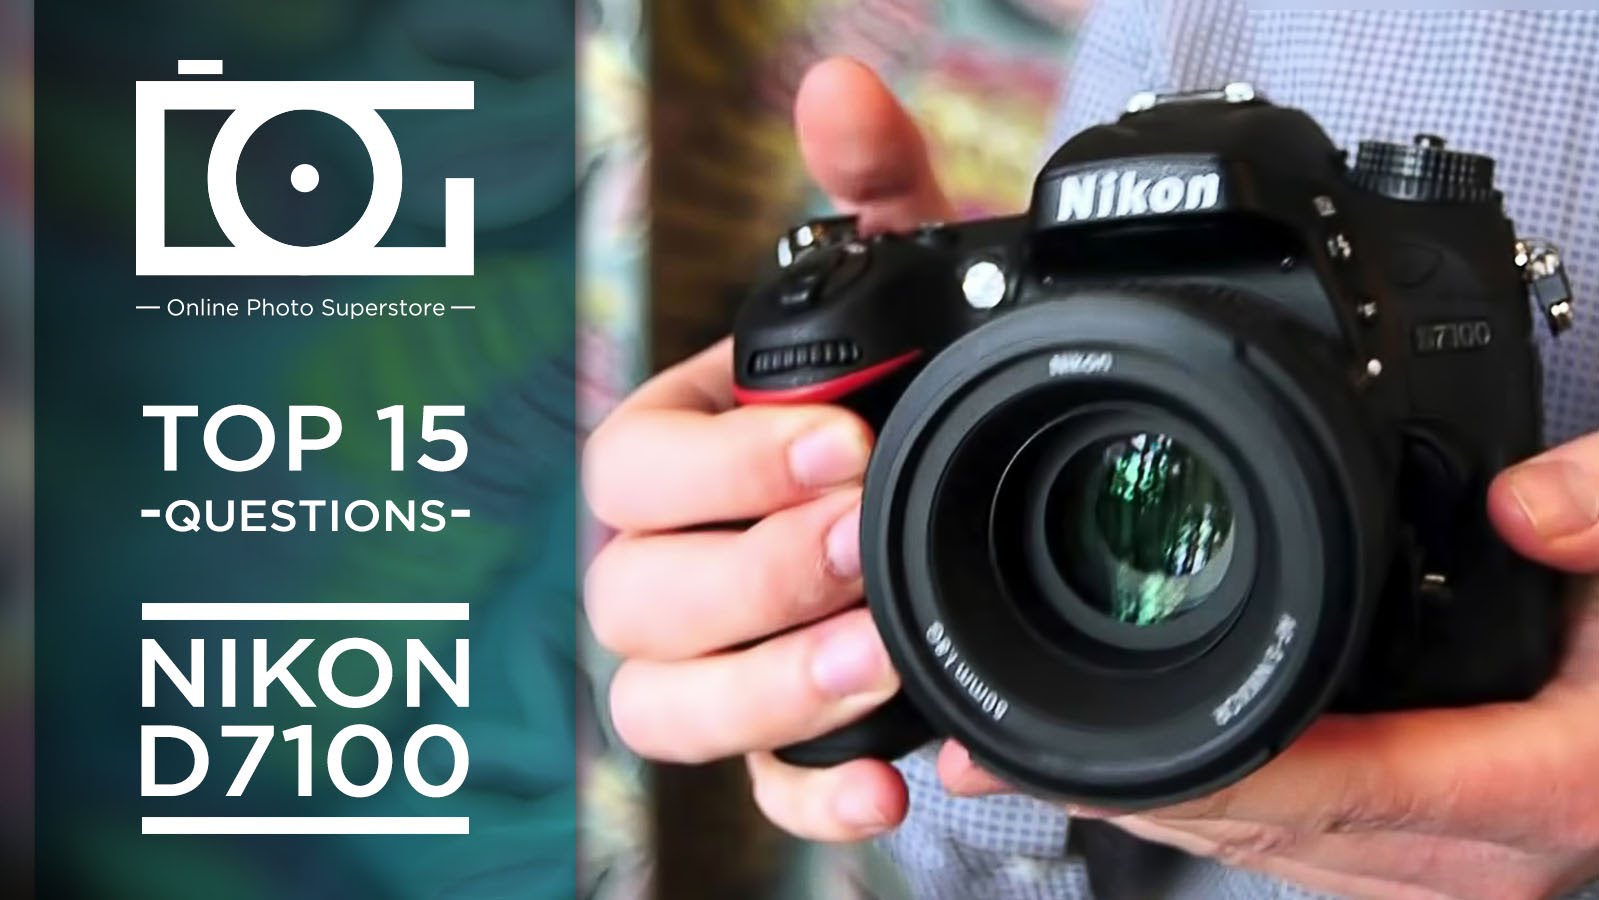 TUTORIAL | Top 15 Most Common Questions for NIKON D7100 Camera